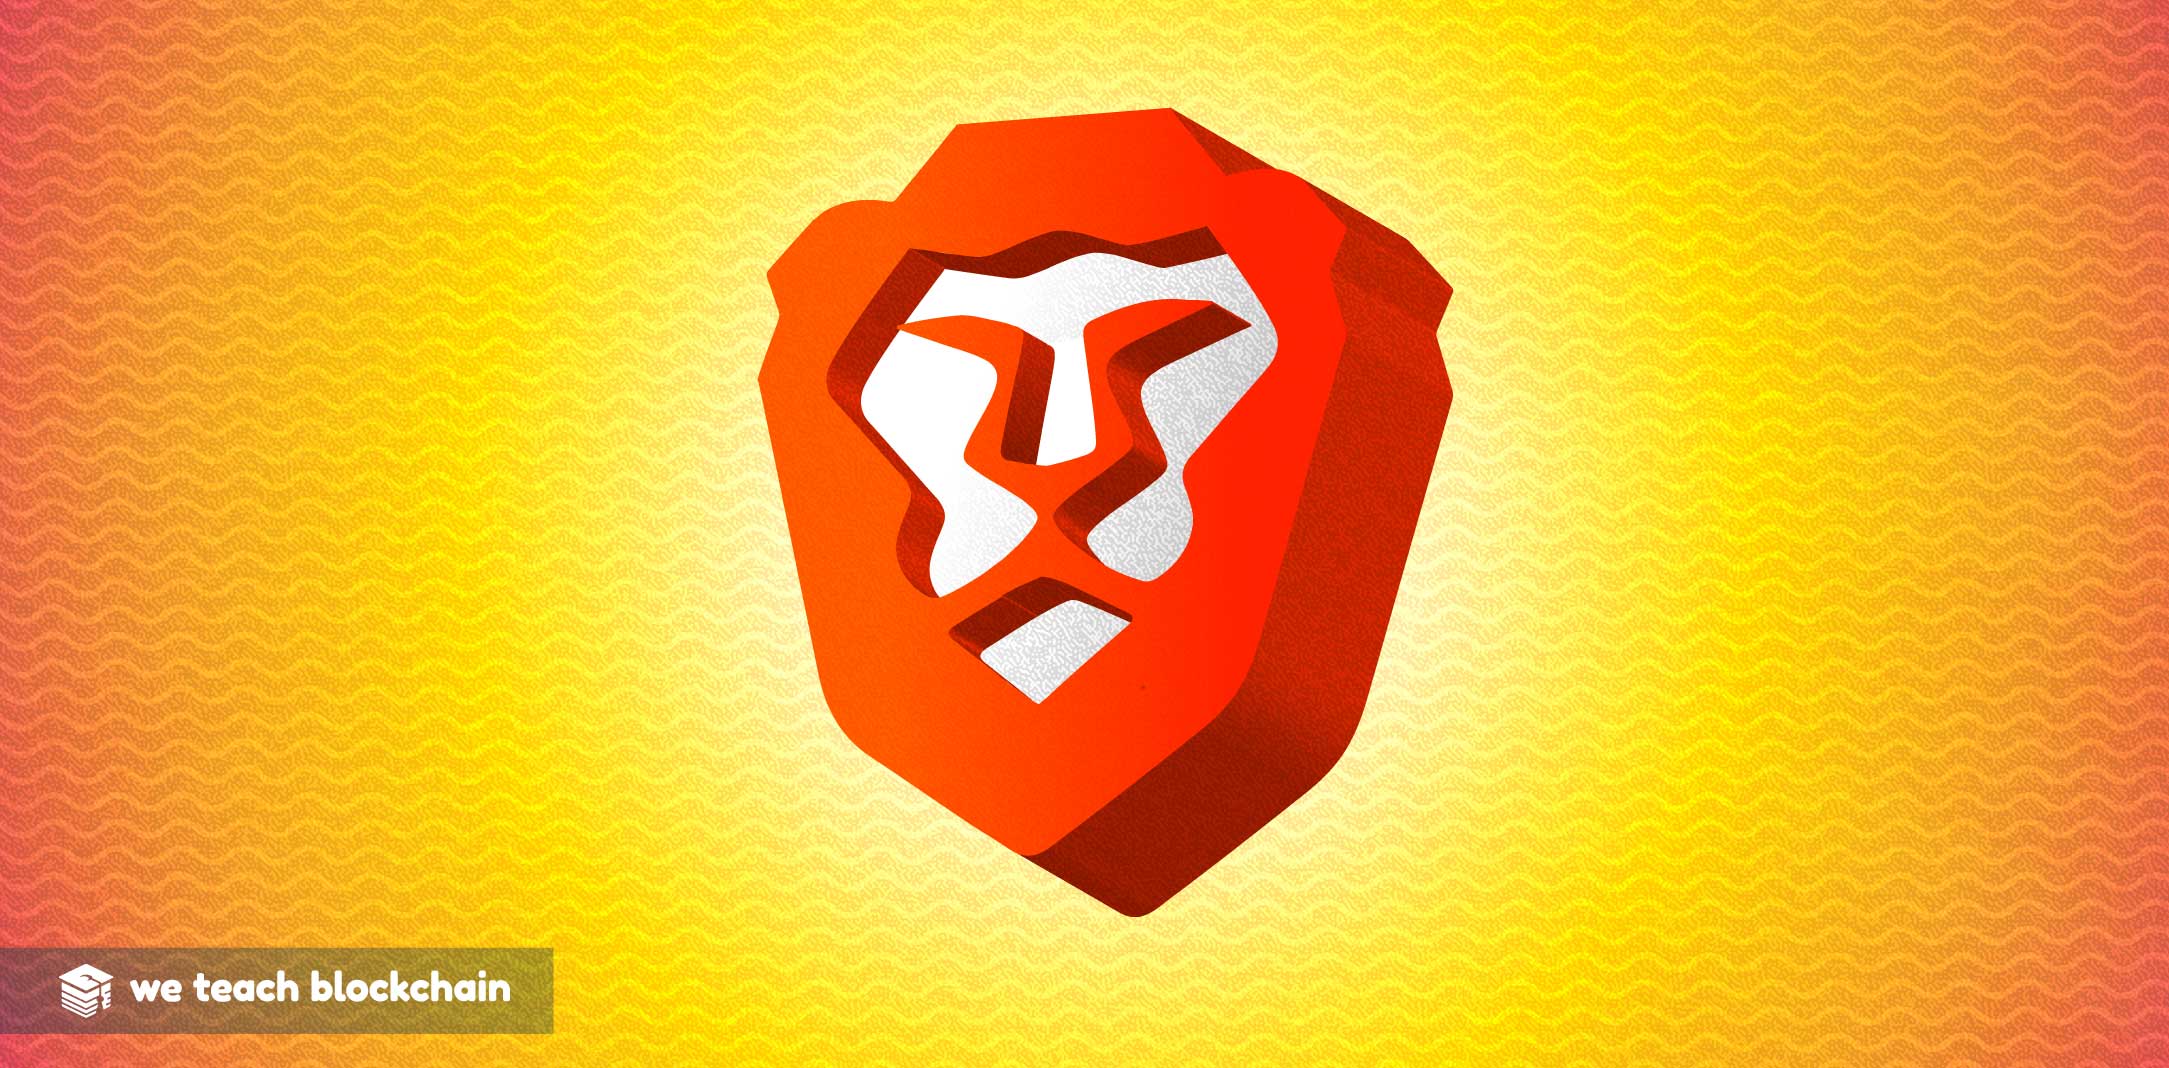 Brave's lion logo